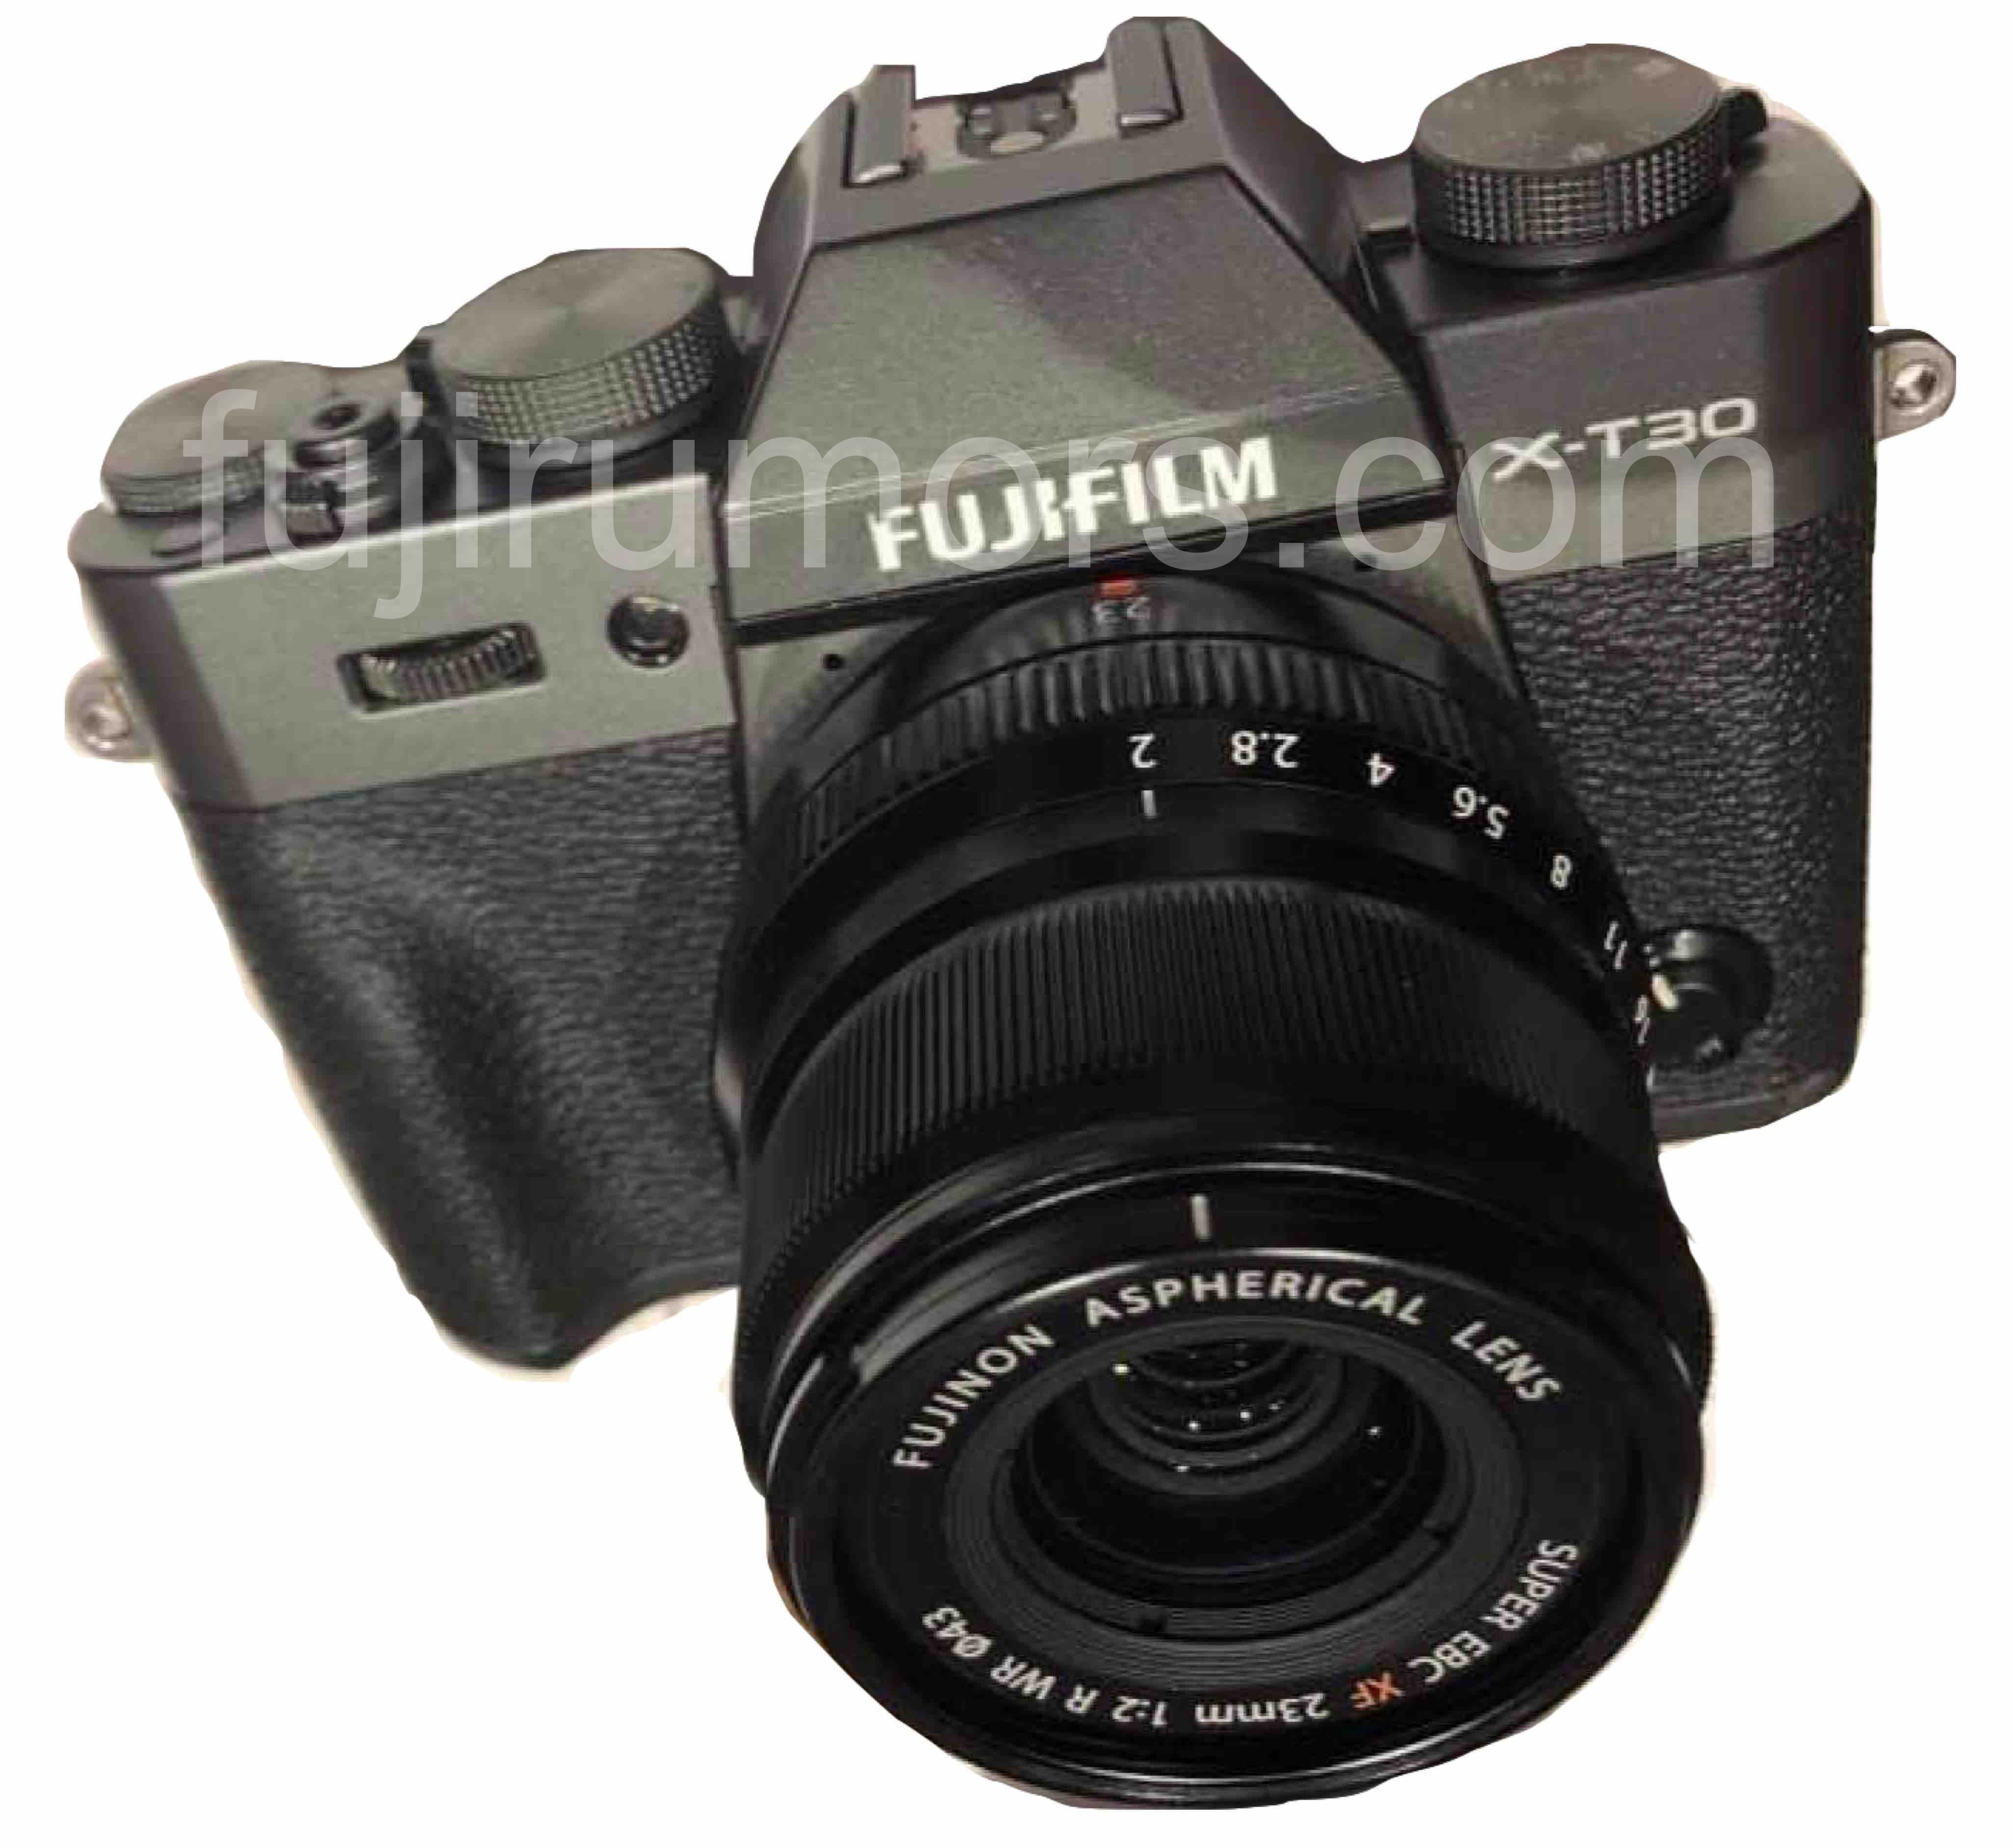 Fujifilm-X-T30-Dark-Grey-Front-WM.jpg